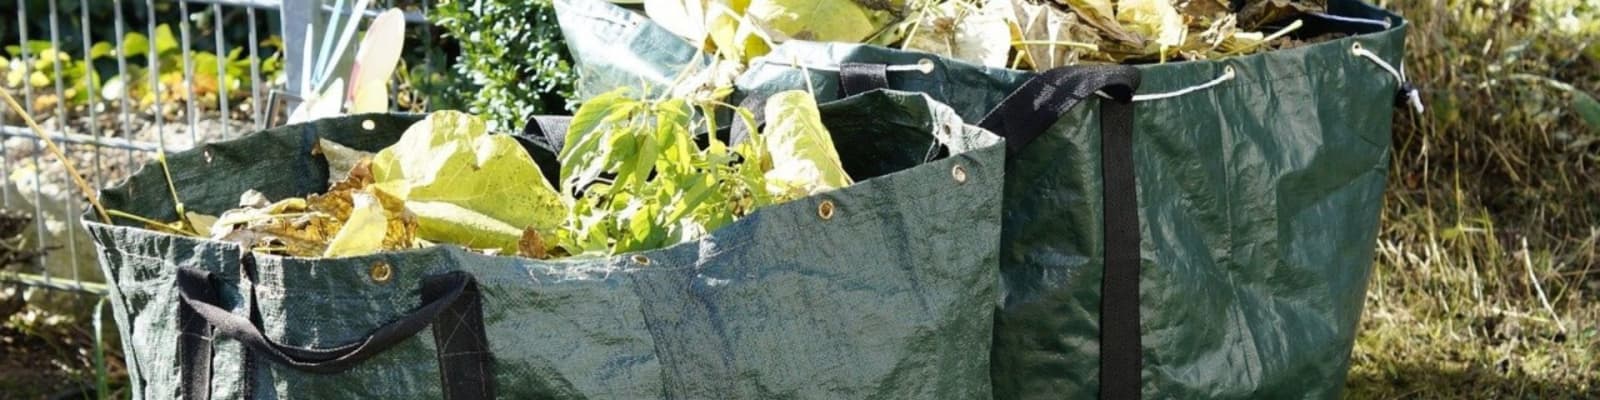 garden refuse removal pros in Sandton